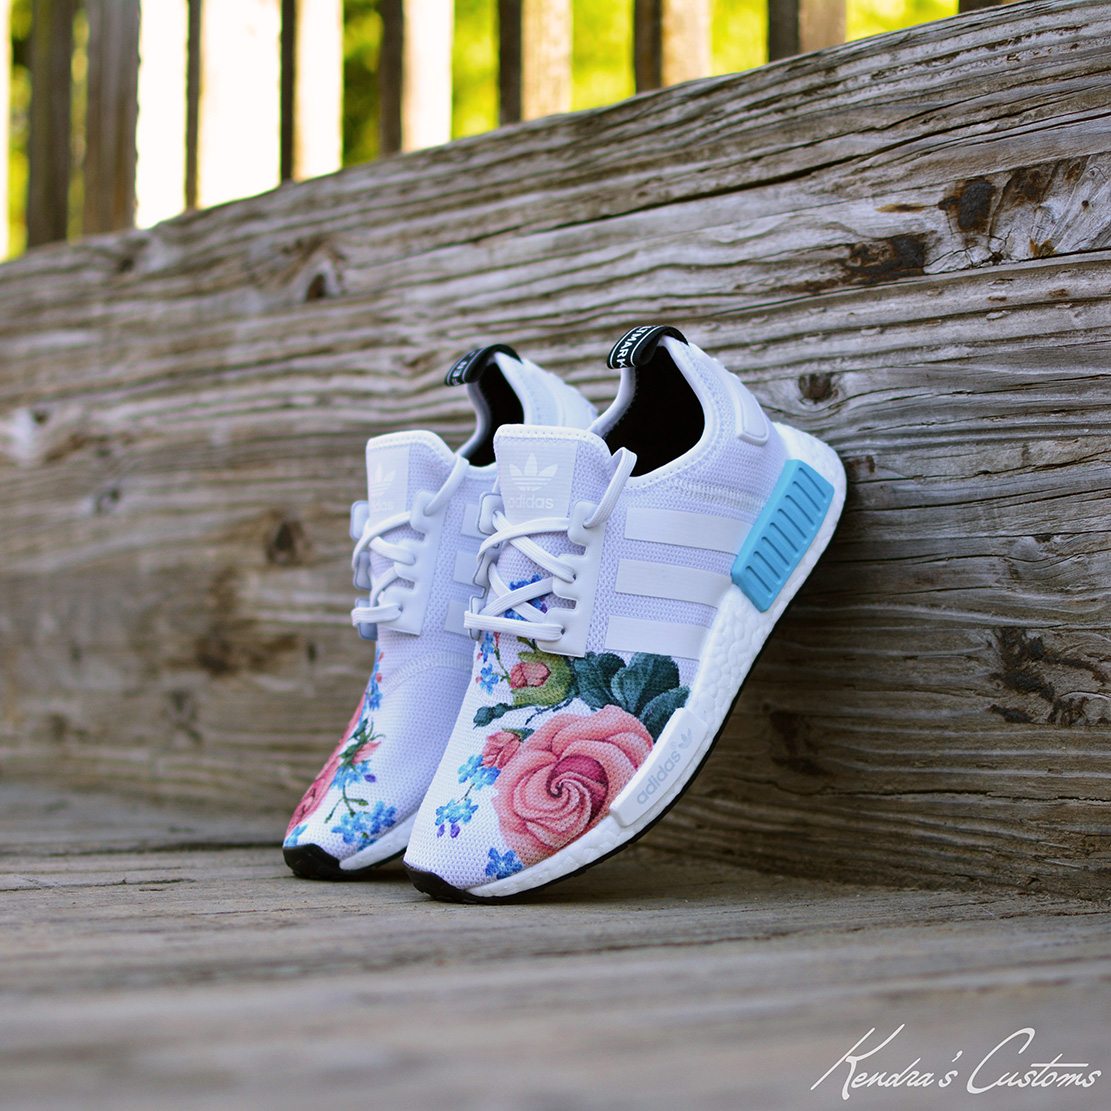 adidas NMD "Grandma's Floral" Custom by Kendra's Customs